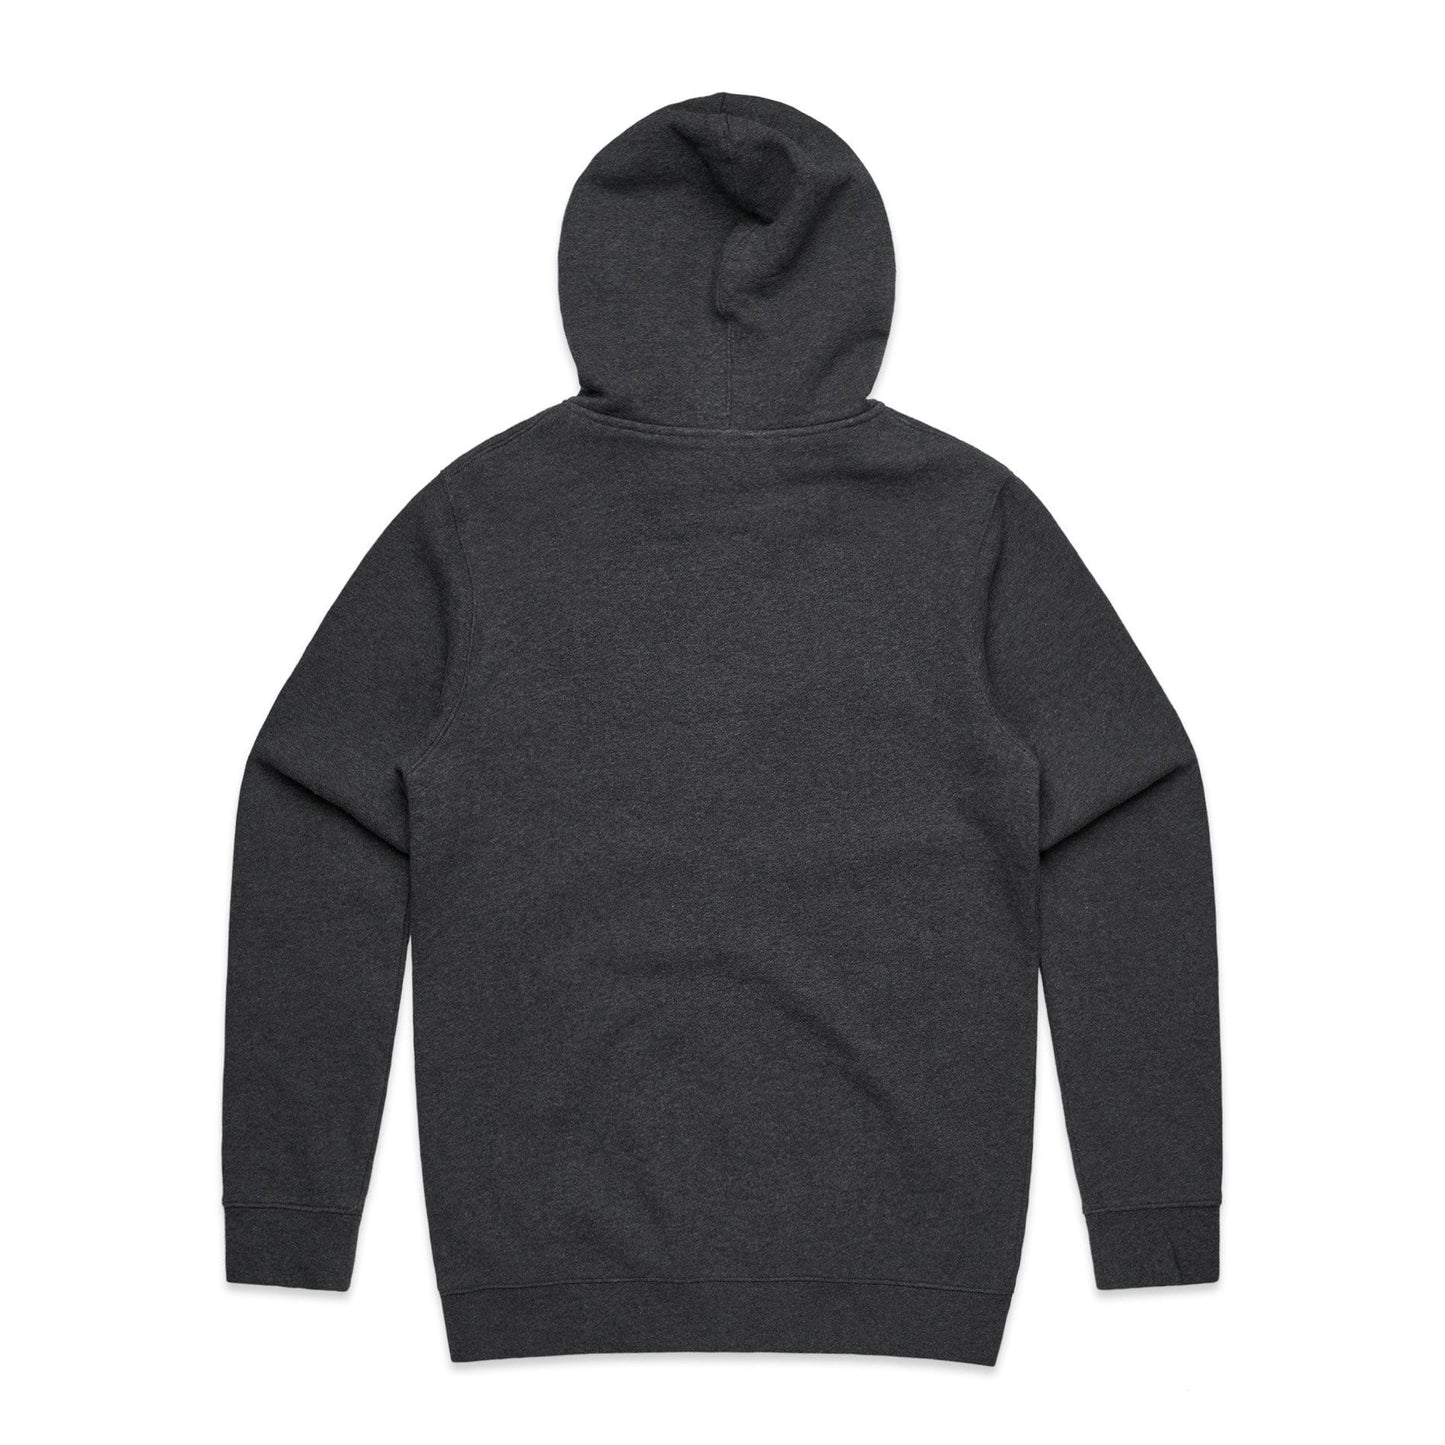 As Colour Casual Wear As Colour Men's index zip hoodie 5204